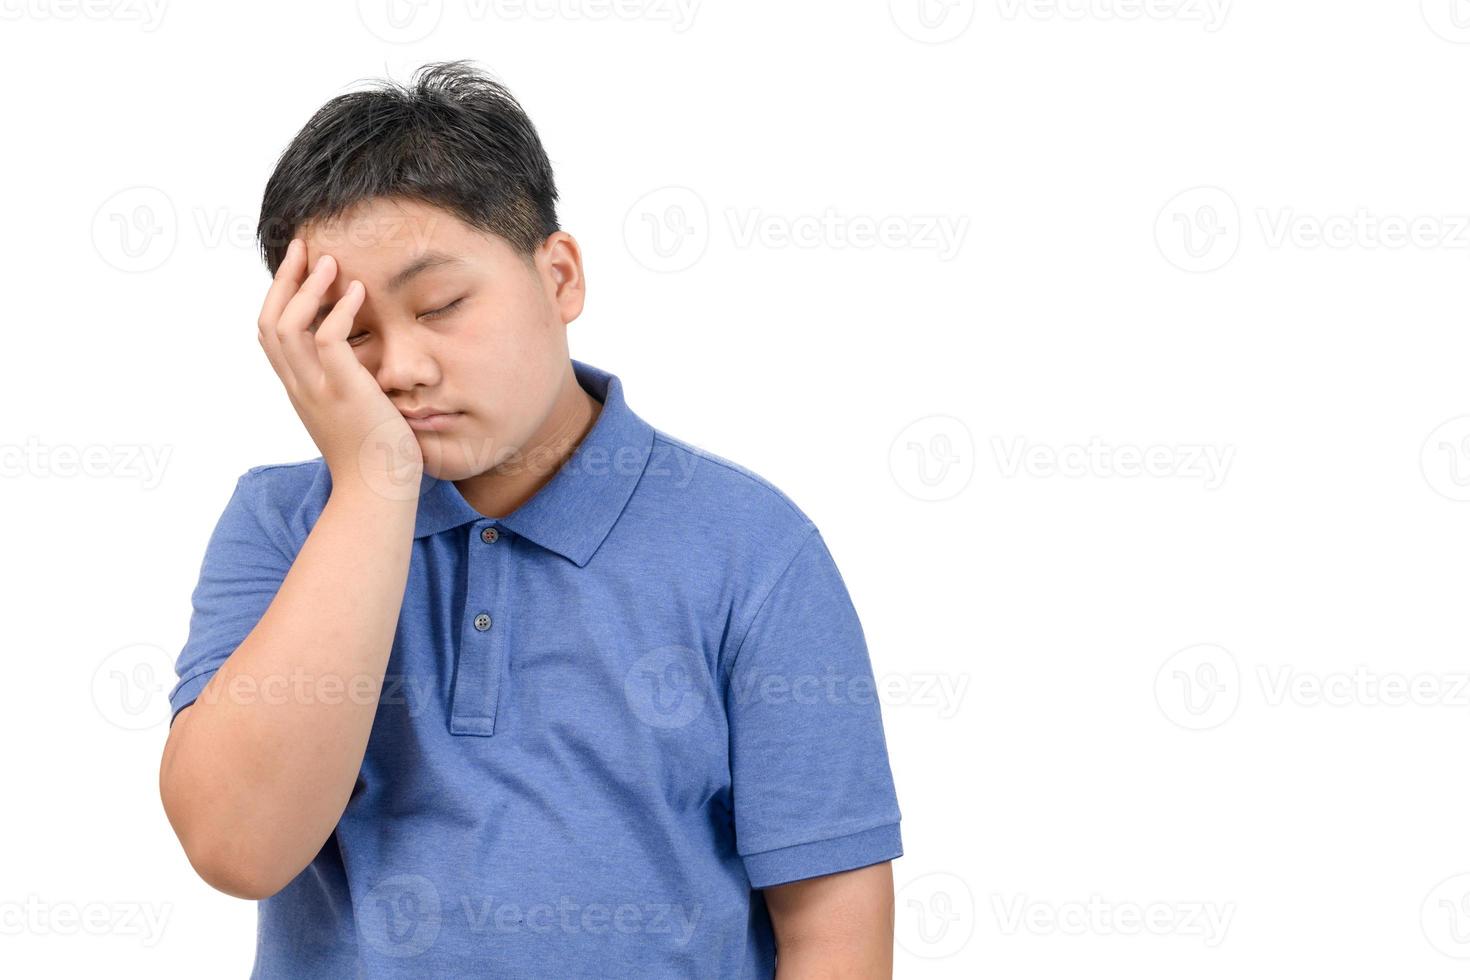 boy wear blue polo shirt bored or sleep isolated on white background, photo